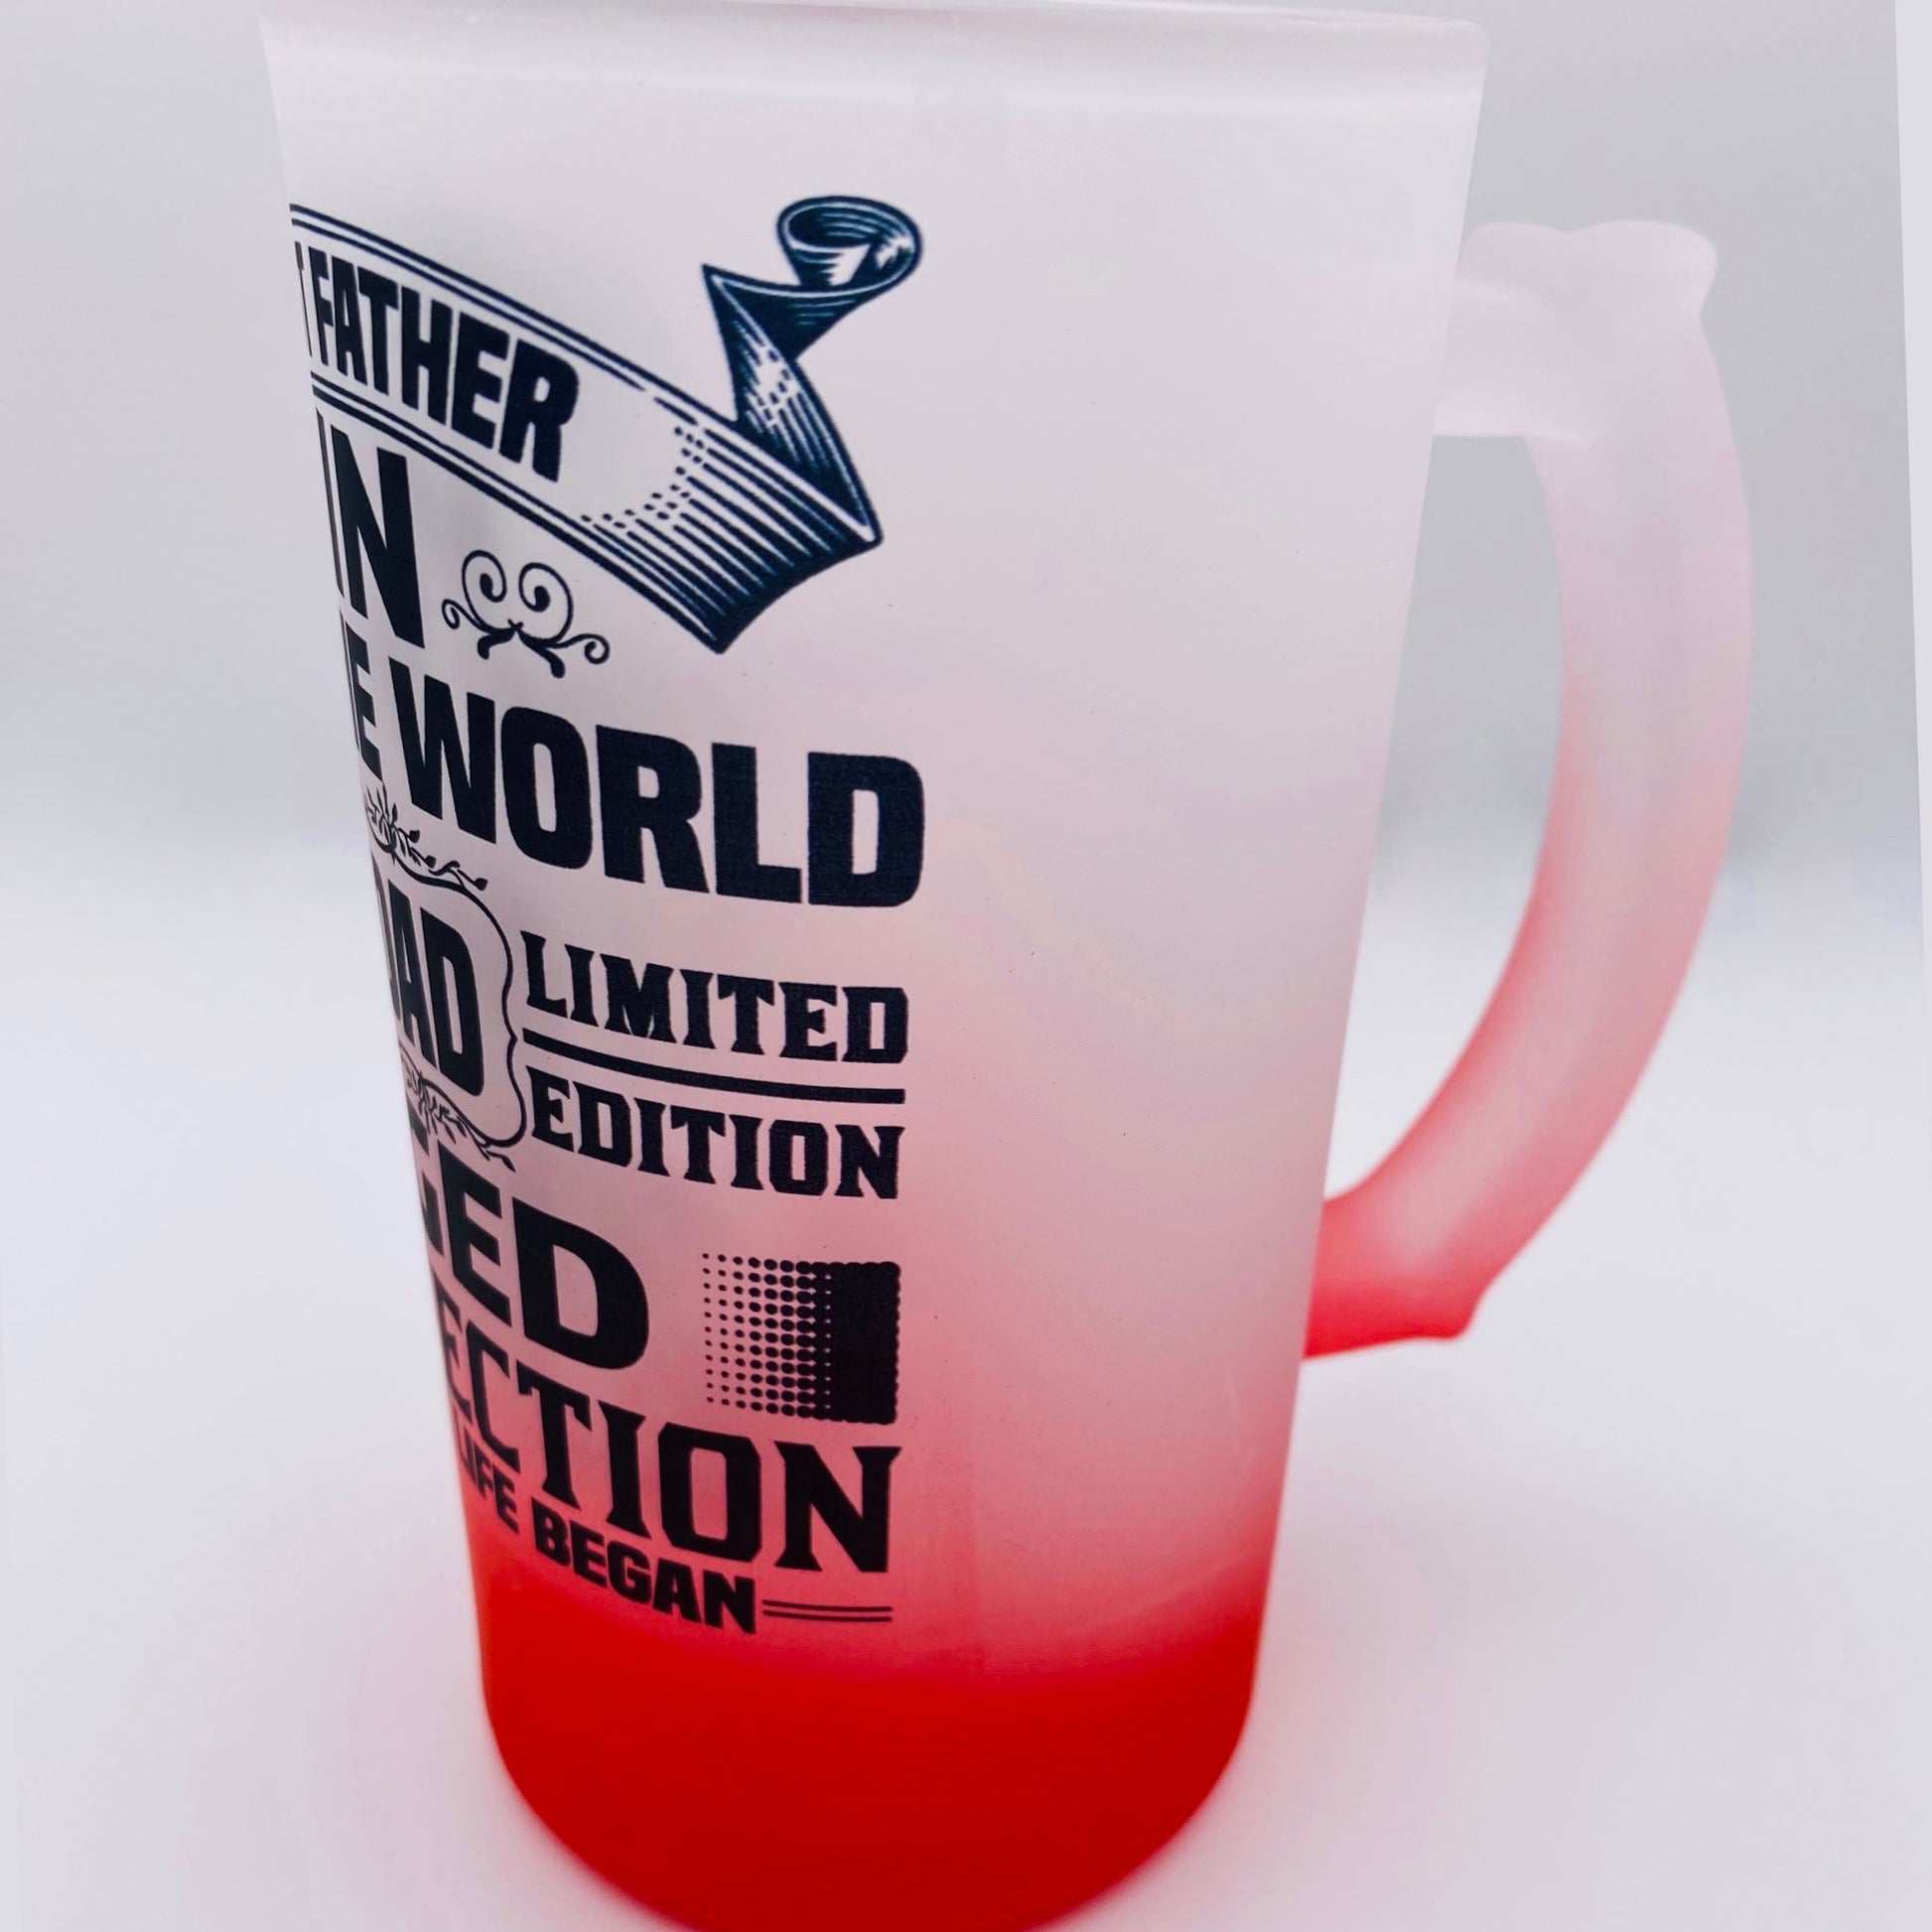 Best Father 16 oz 3D Sublimation Beer Mug - Joanell Creations